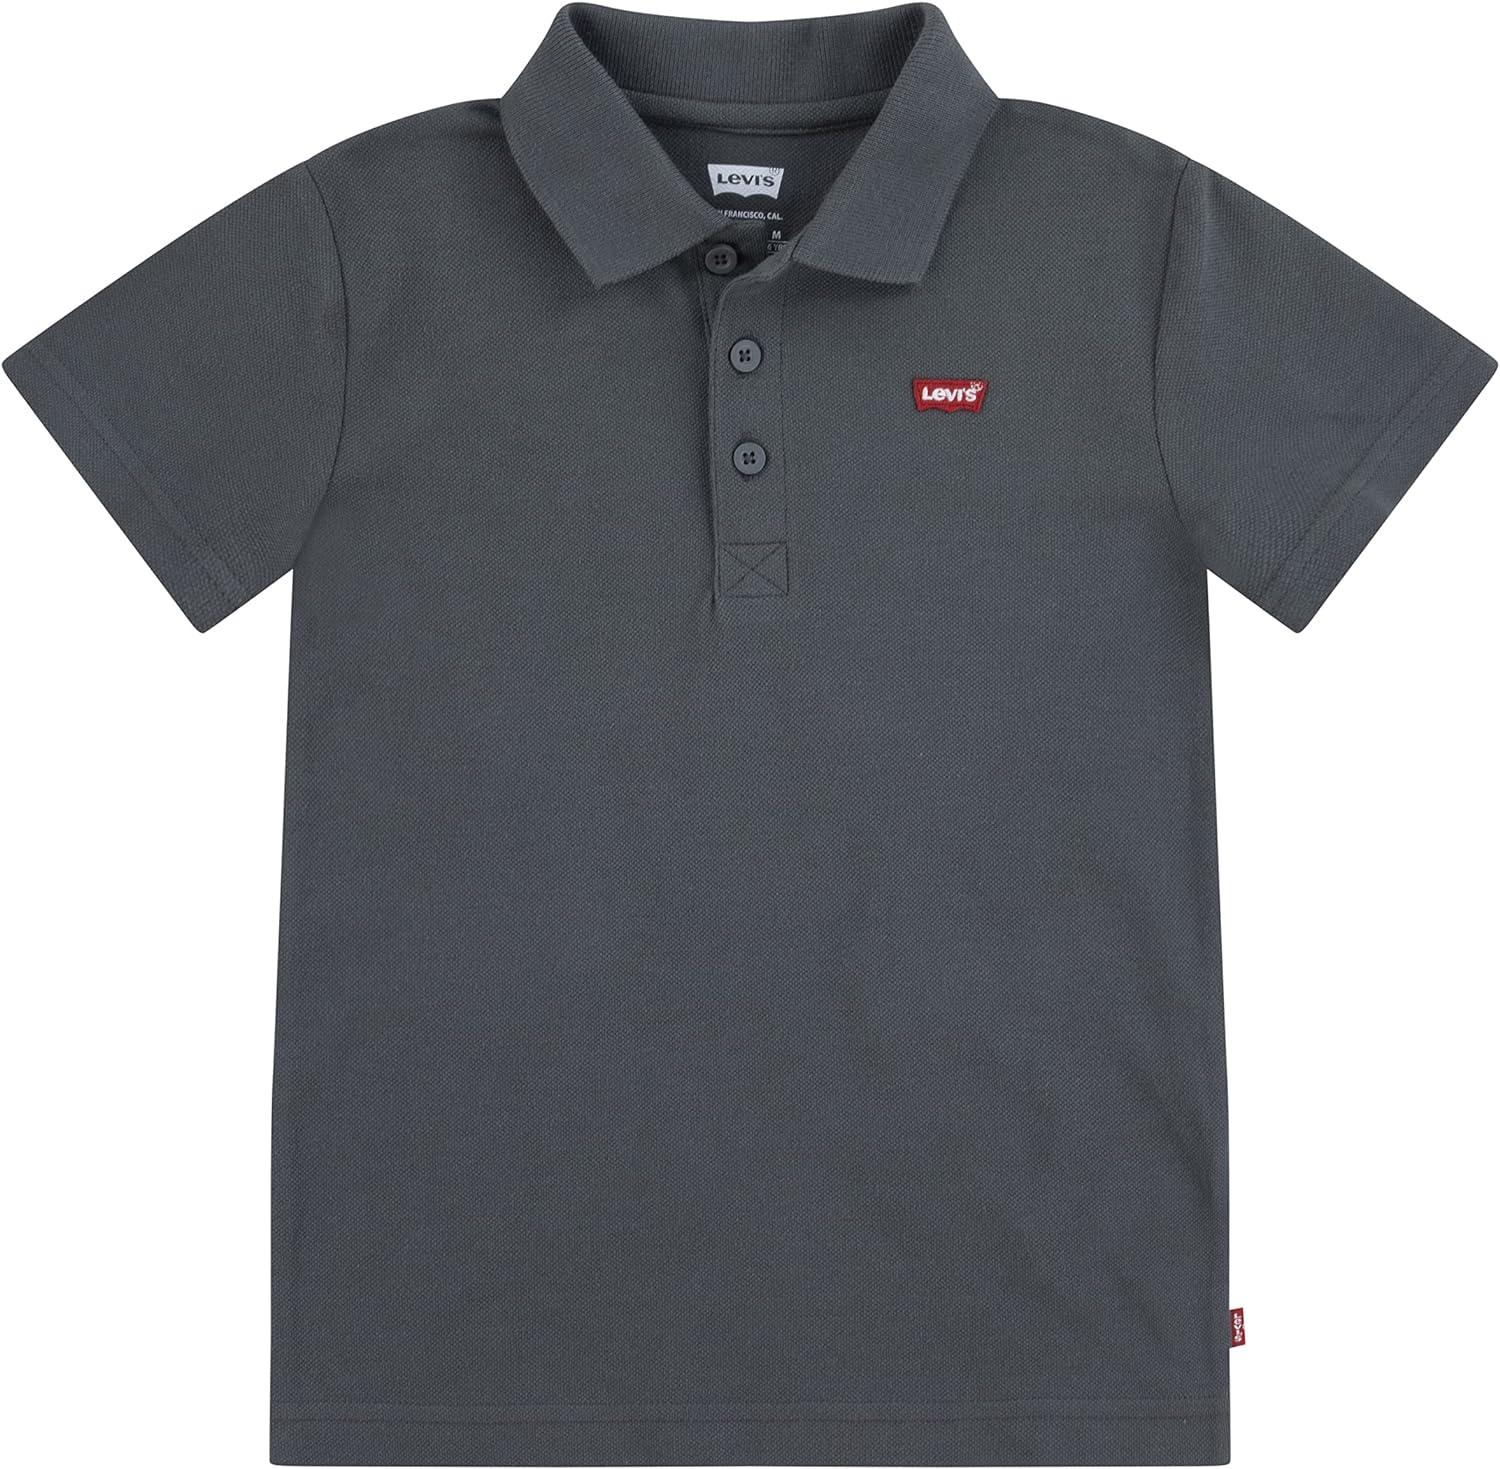 Levi's Boys' Polo Shirt, Shadow Grey, 3T $8.16